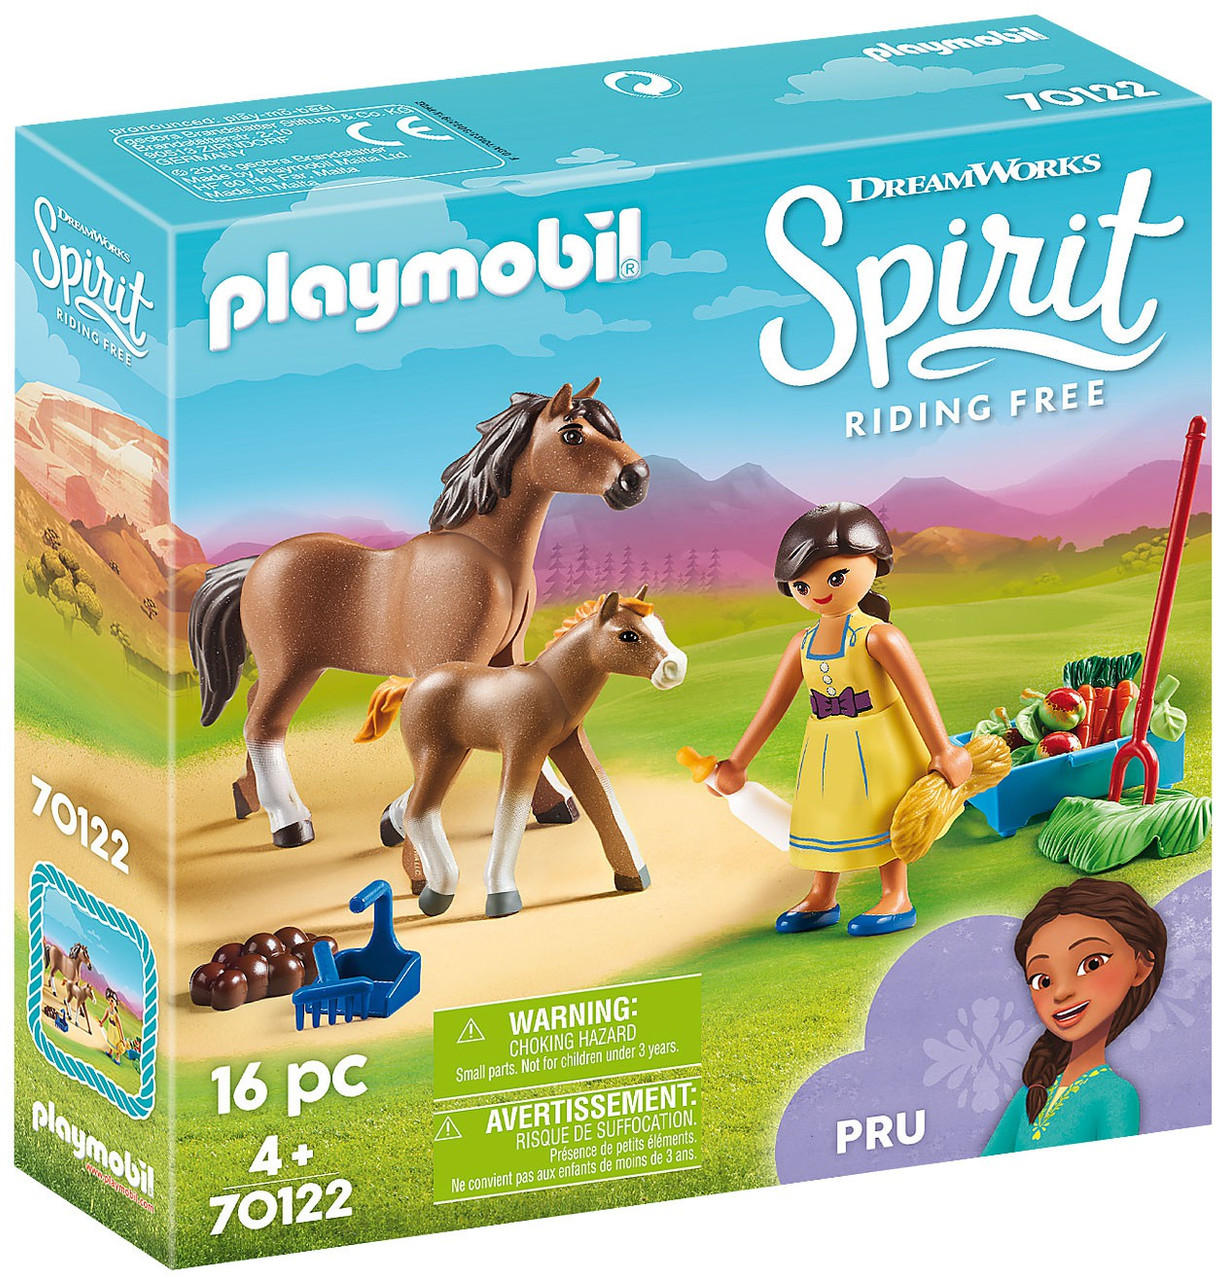 playmobil spirit collection